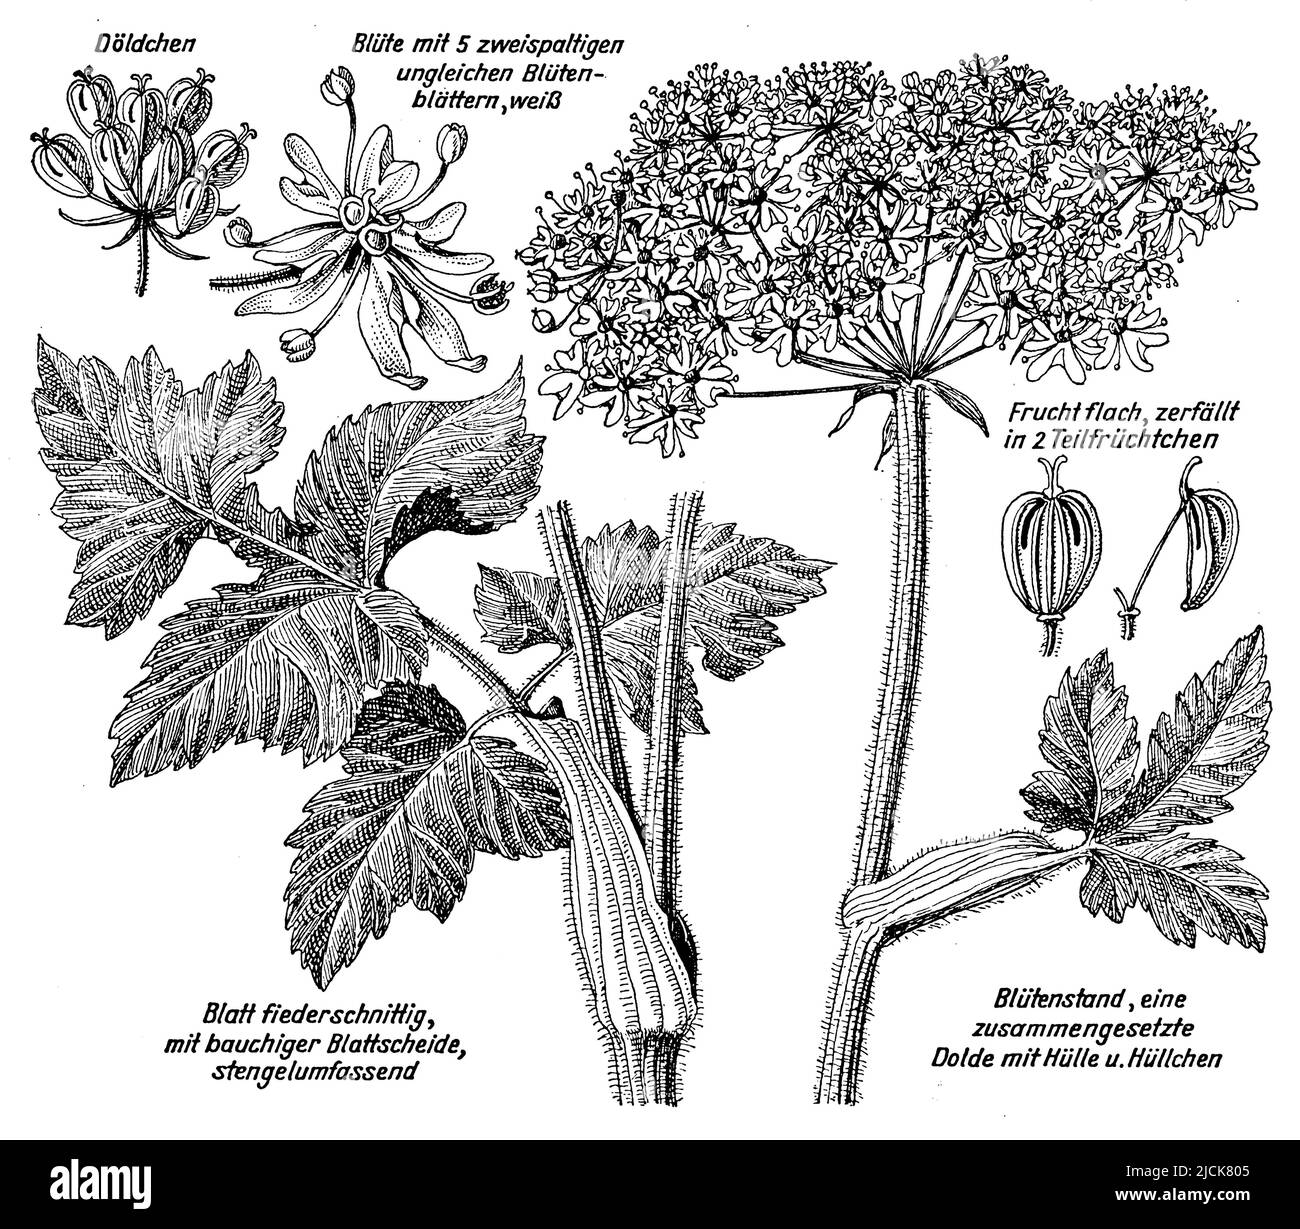 giant hogweed, Heracleum mantegazzianum Syn. Heracleum giganteum,  (biology book, 1941), Riesen-Bärenklau, Berce du Caucase Stock Photo